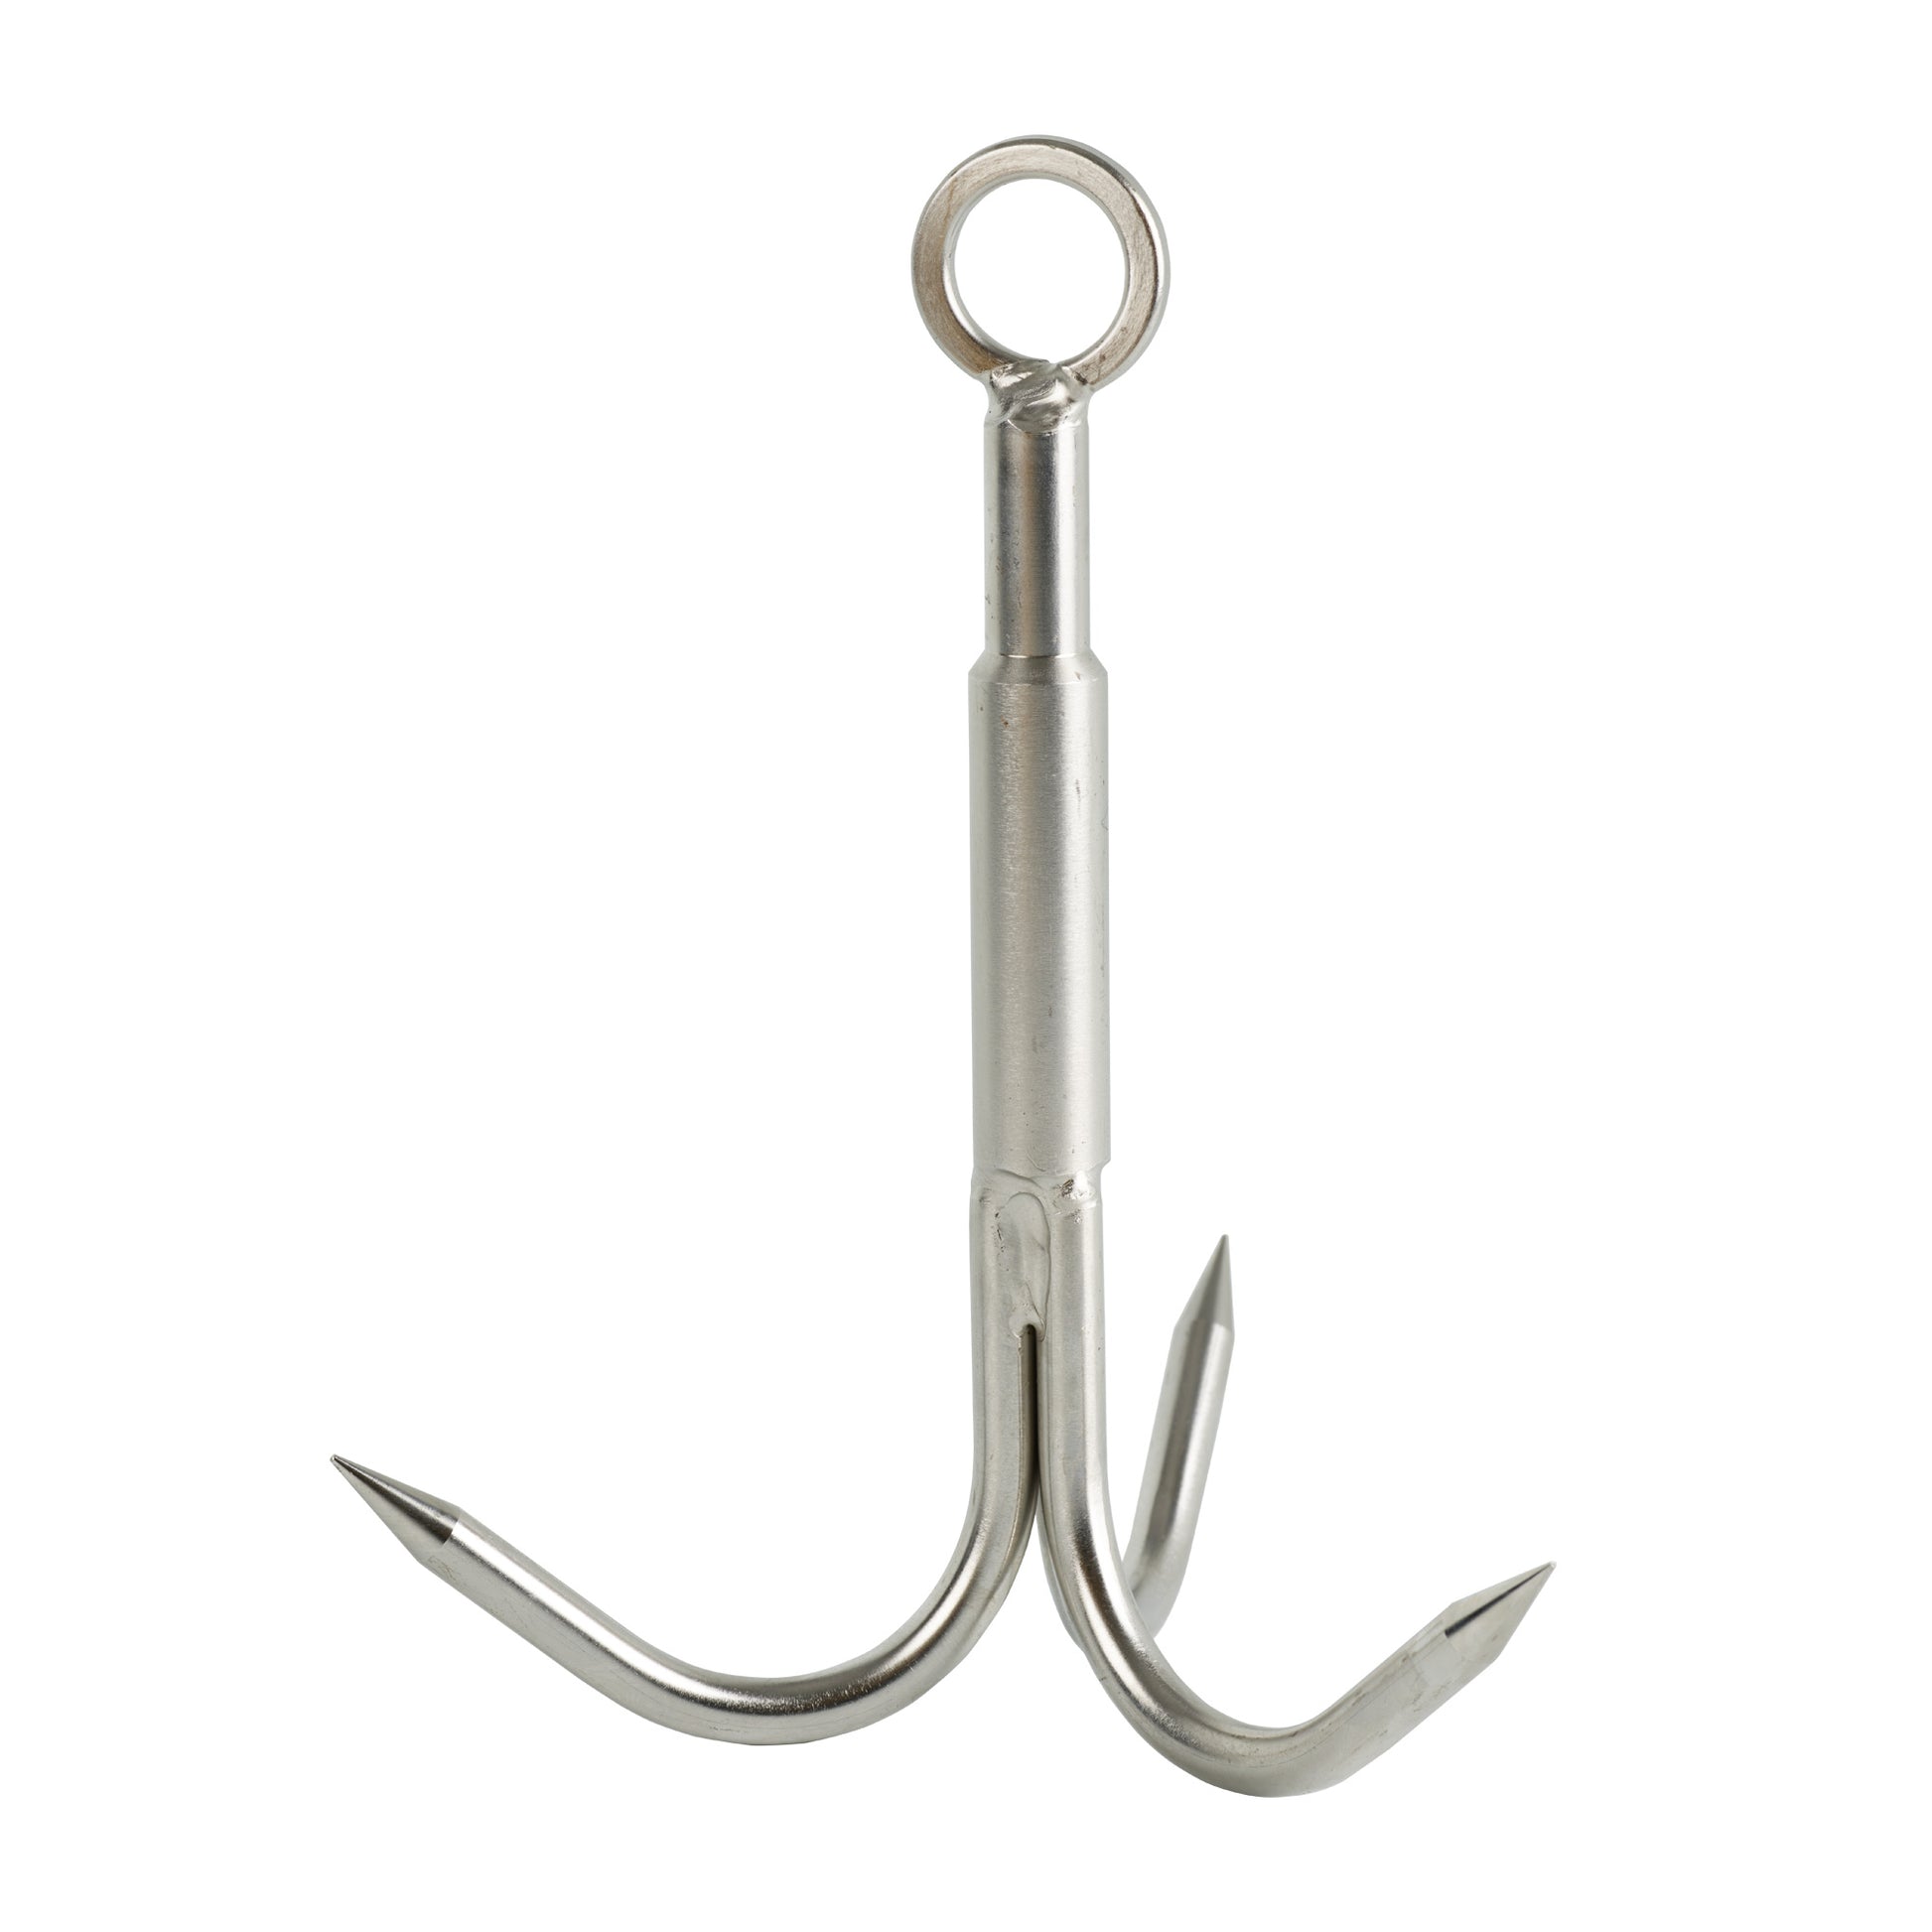 Bondi Grappling Hook L – Bondi Magnets, specially made for magnet fishing